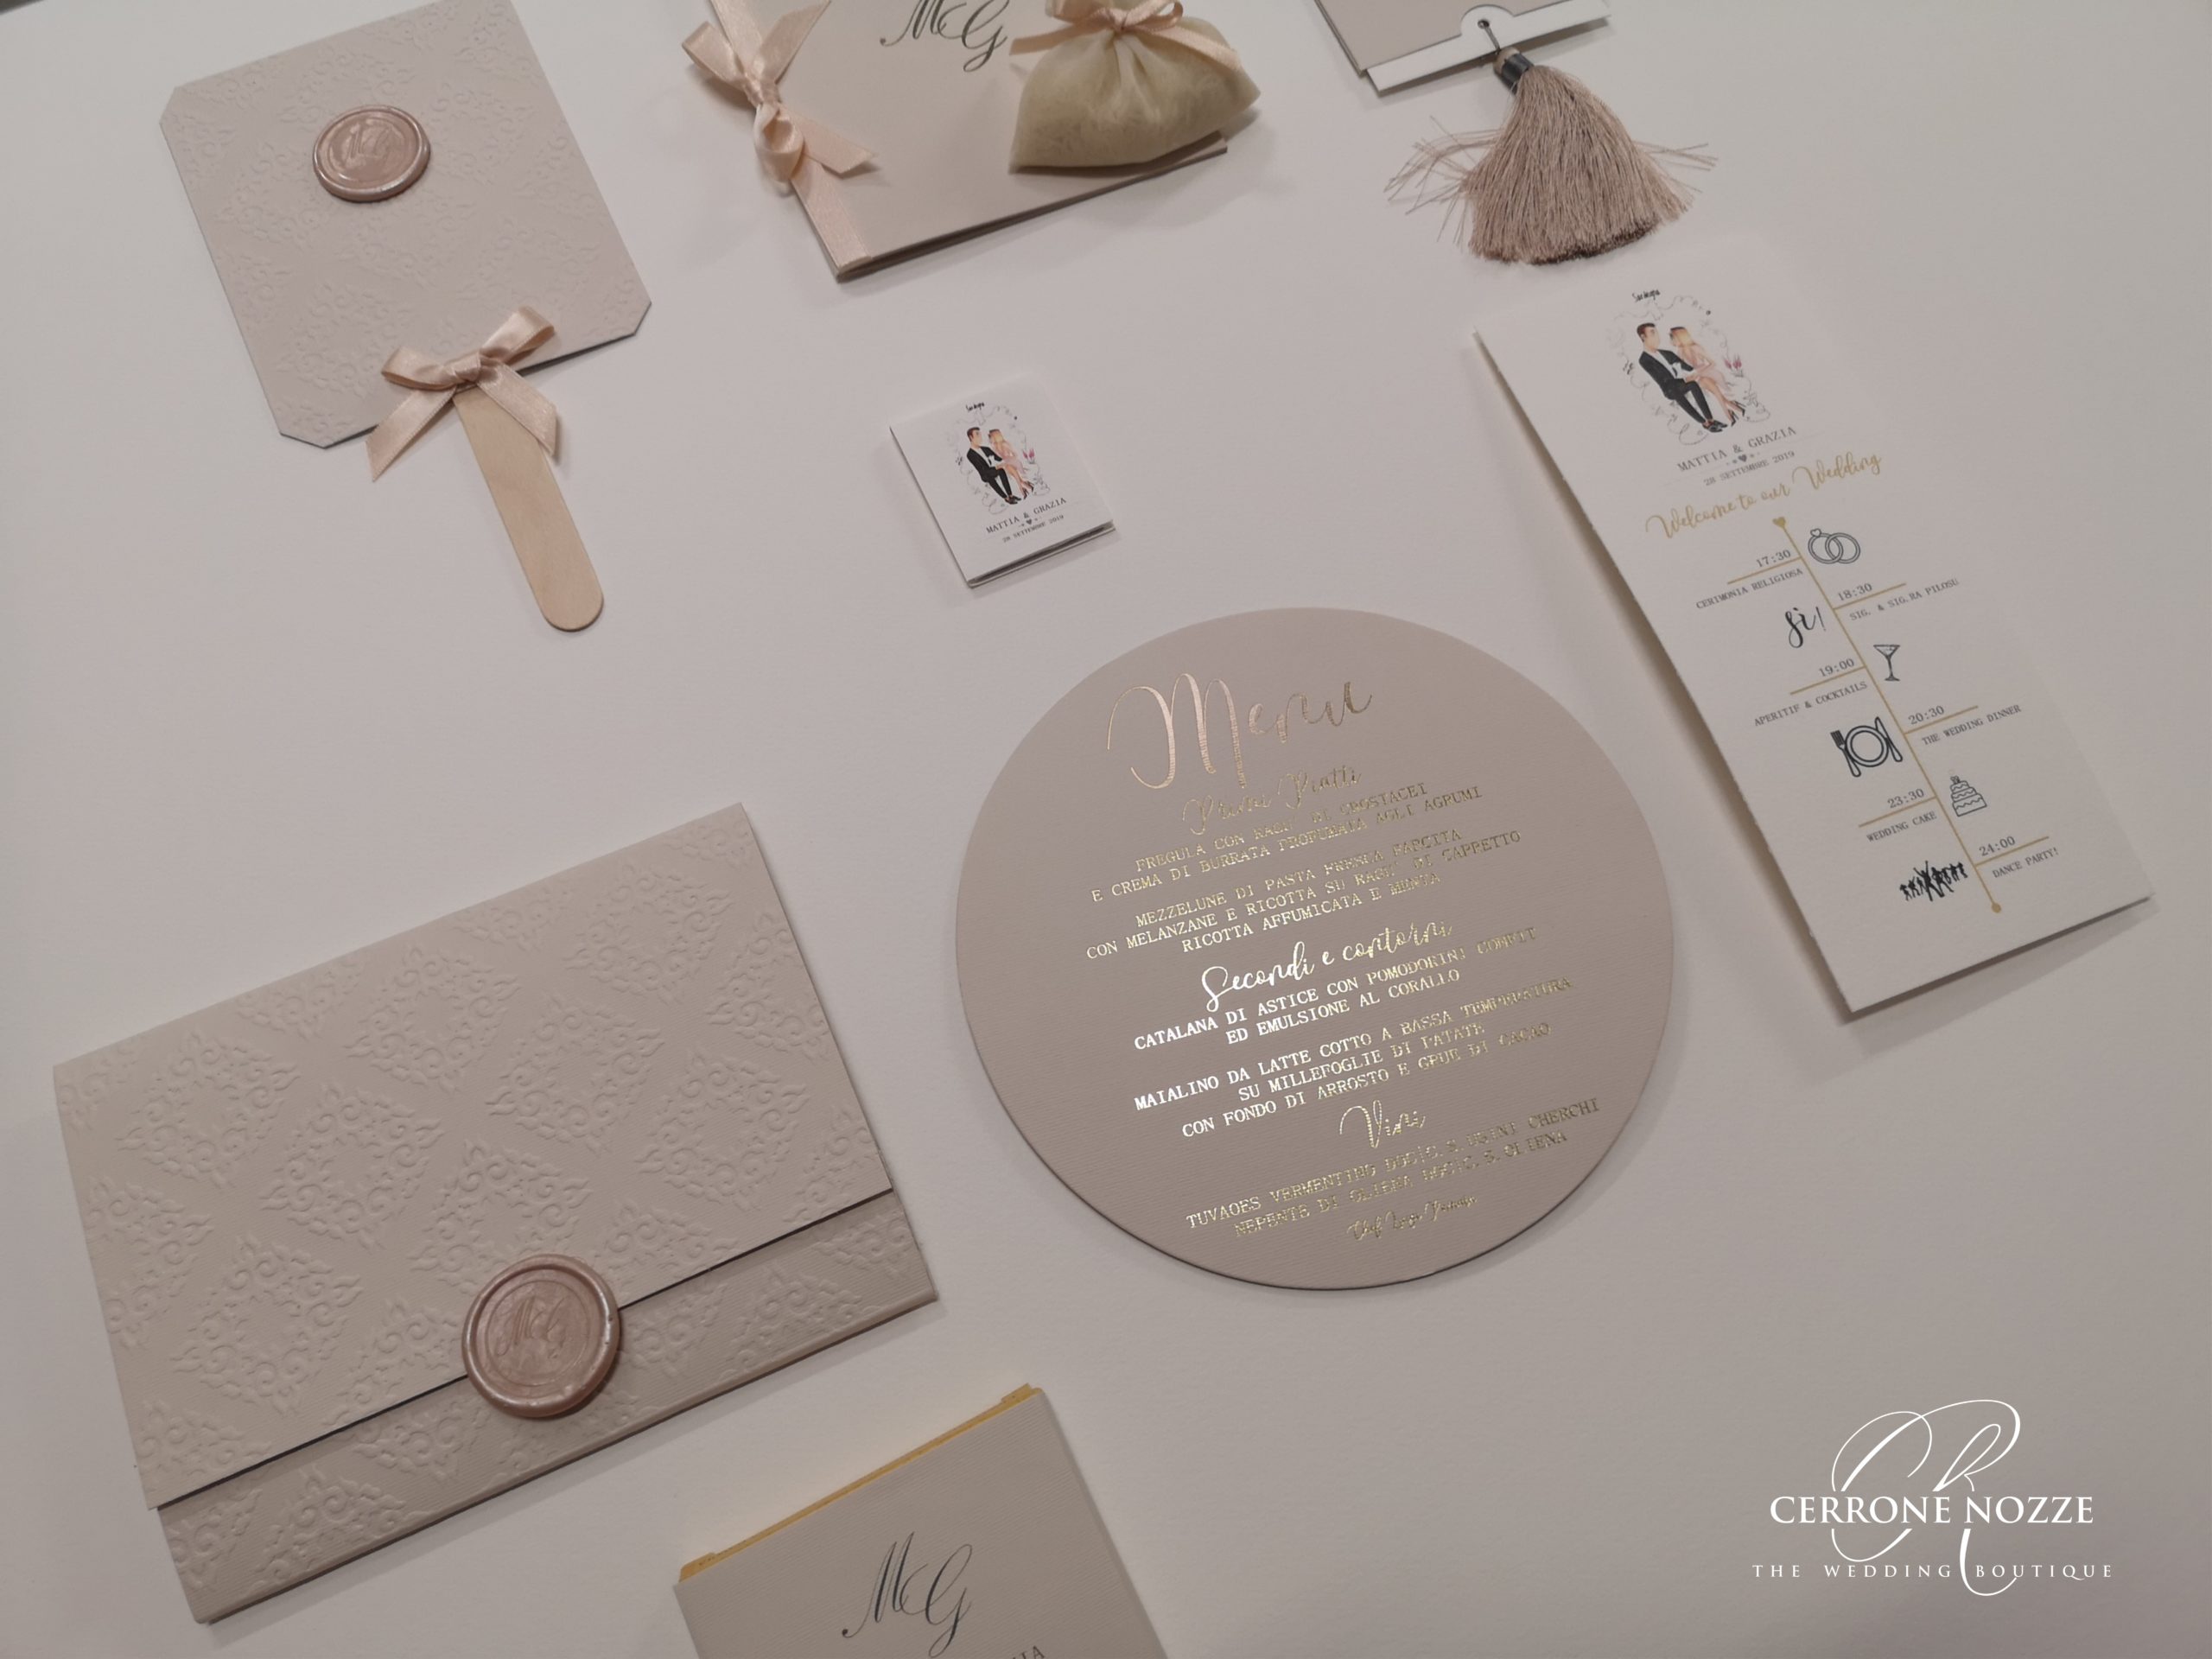  wedding stationery stampa a caldo hotfoil letterpress | Cerrone Nozze wedding boutique